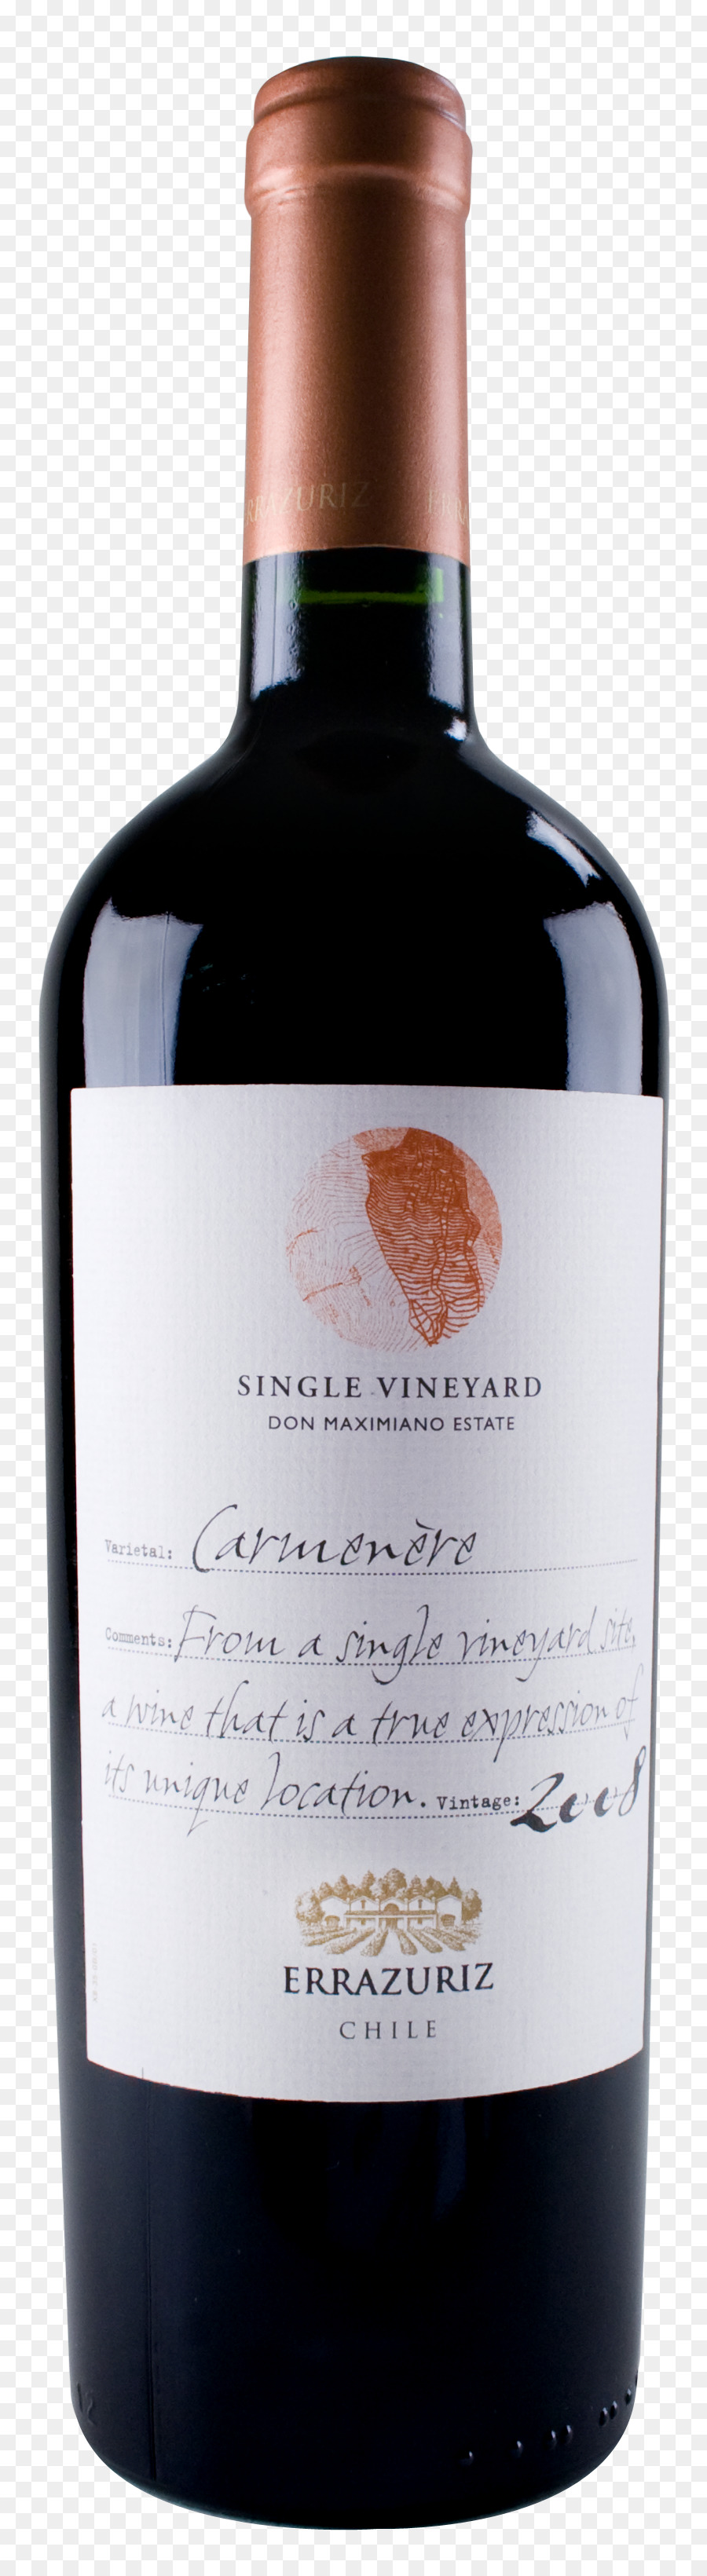 Cabernet Sauvignon Bronco Azienda Vinicola carmenere varietale Napa Valley AVA - vino